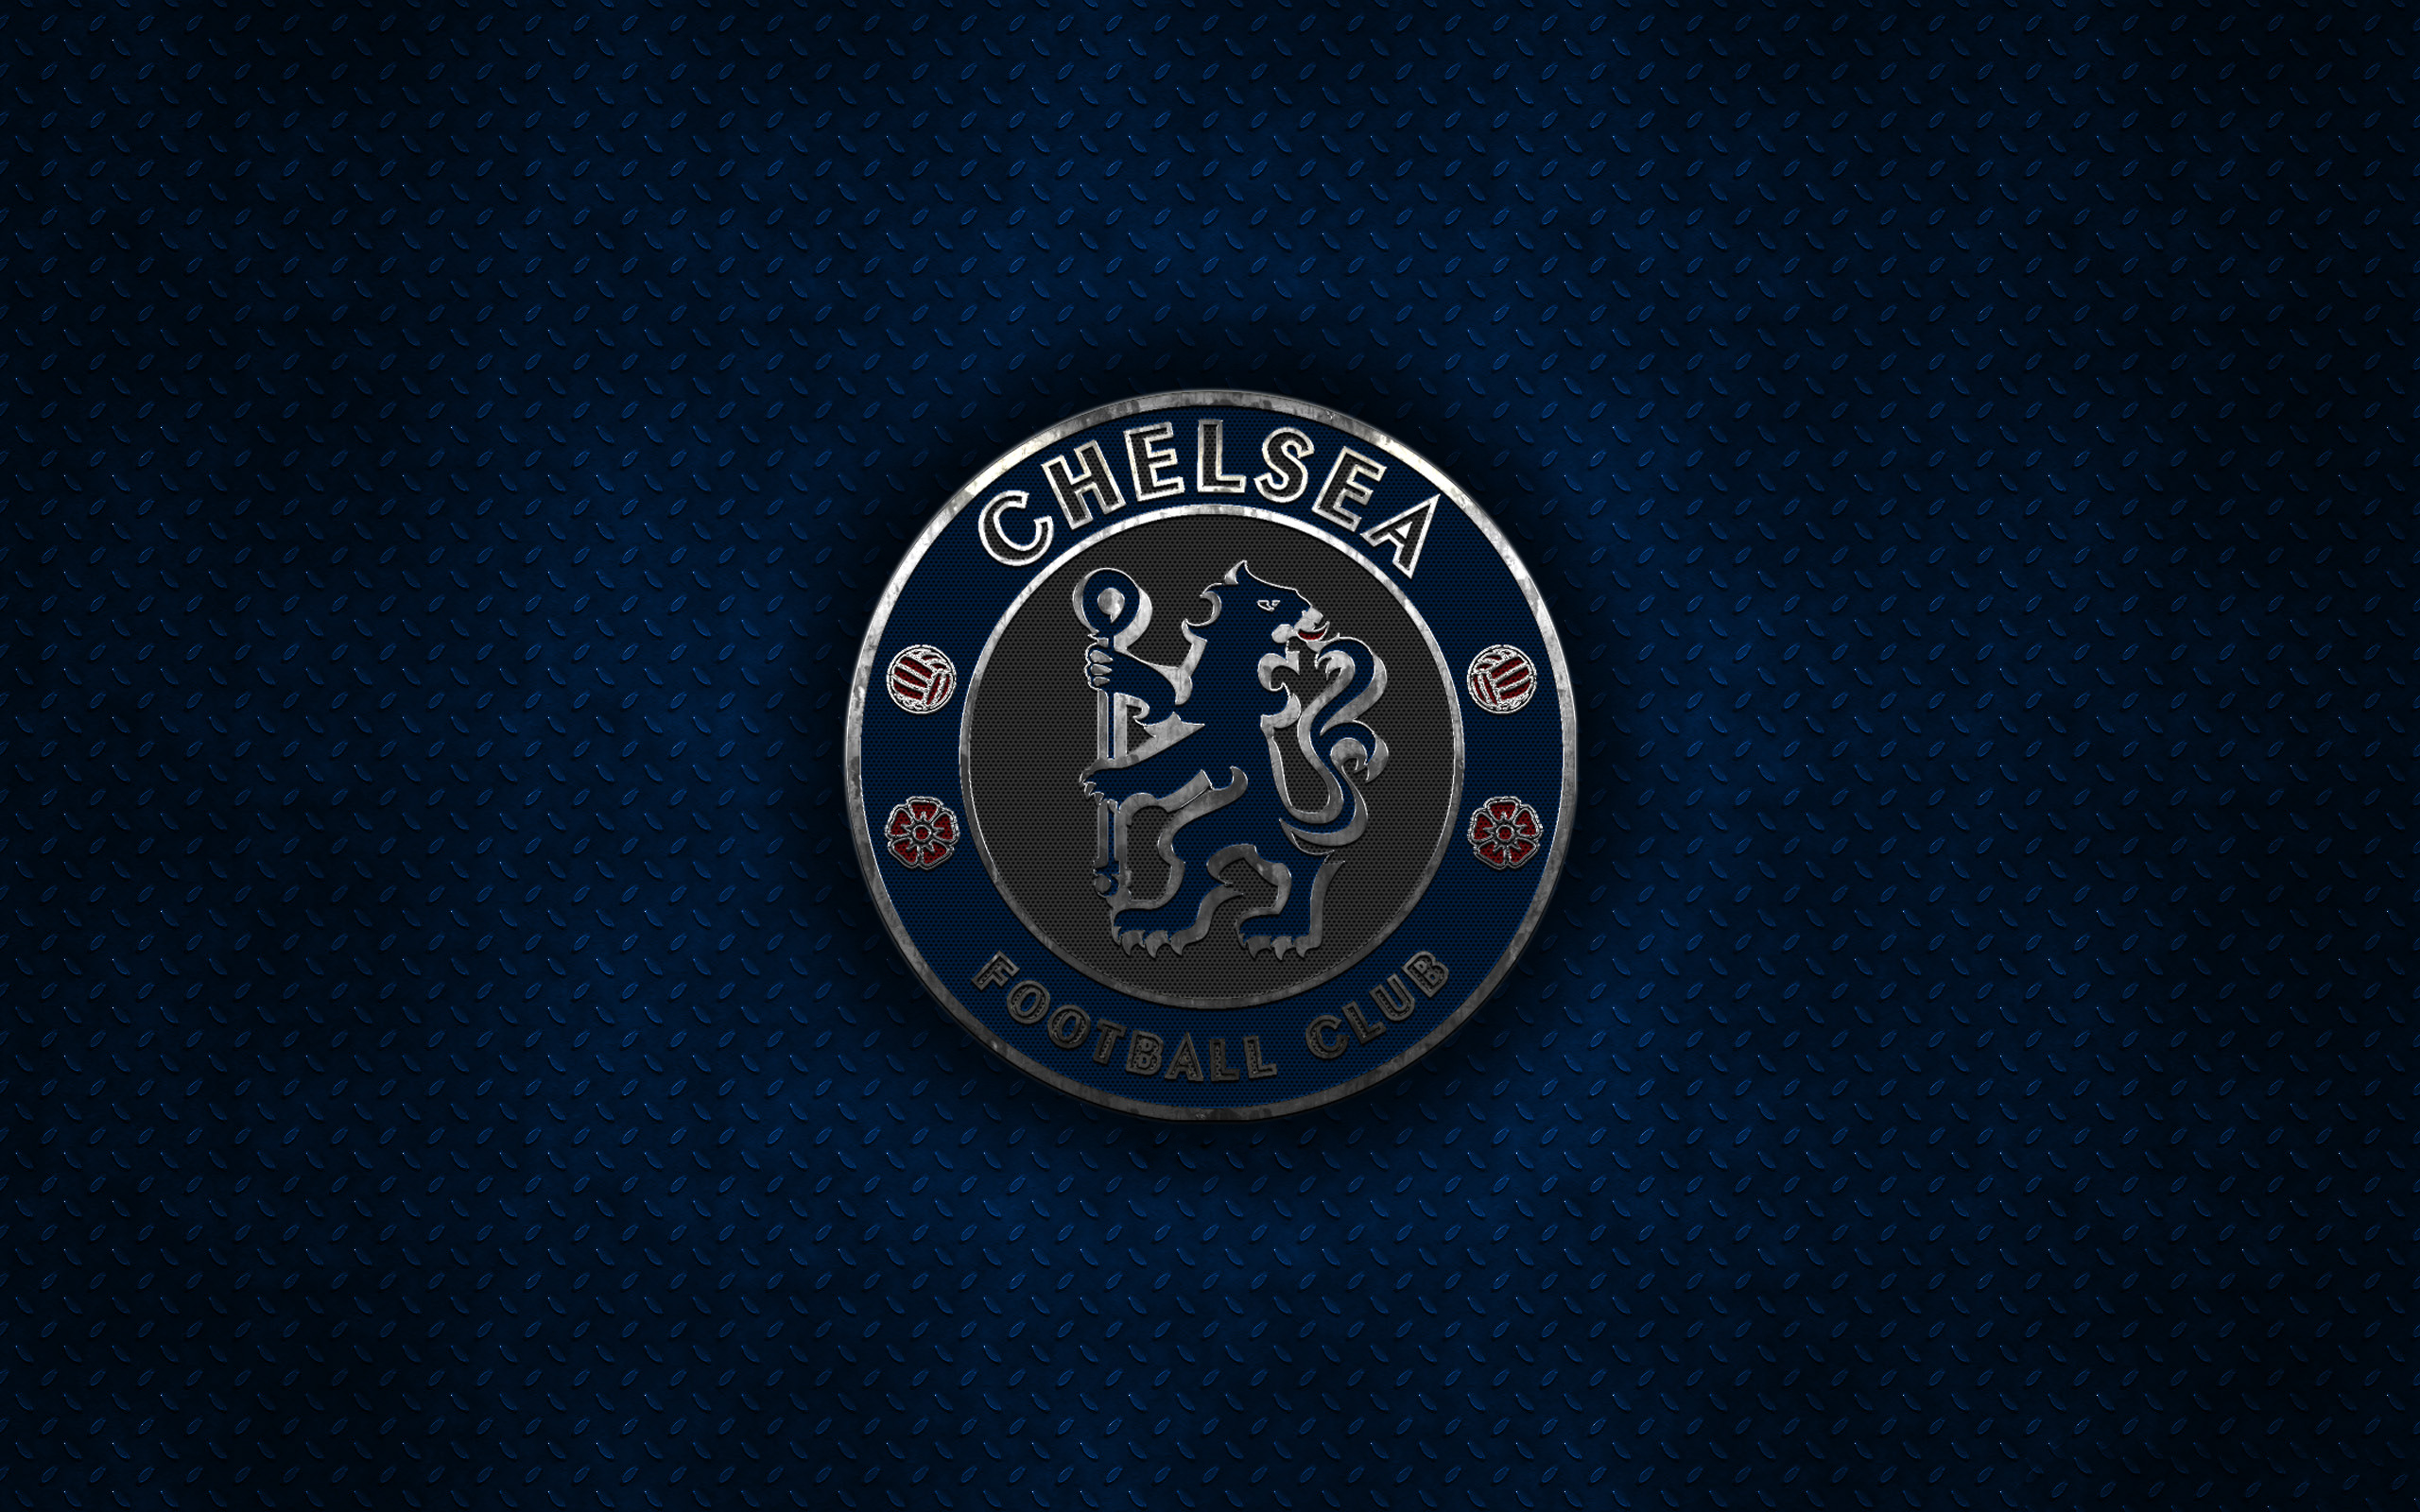 chelsea f c, sports, emblem, logo, soccer